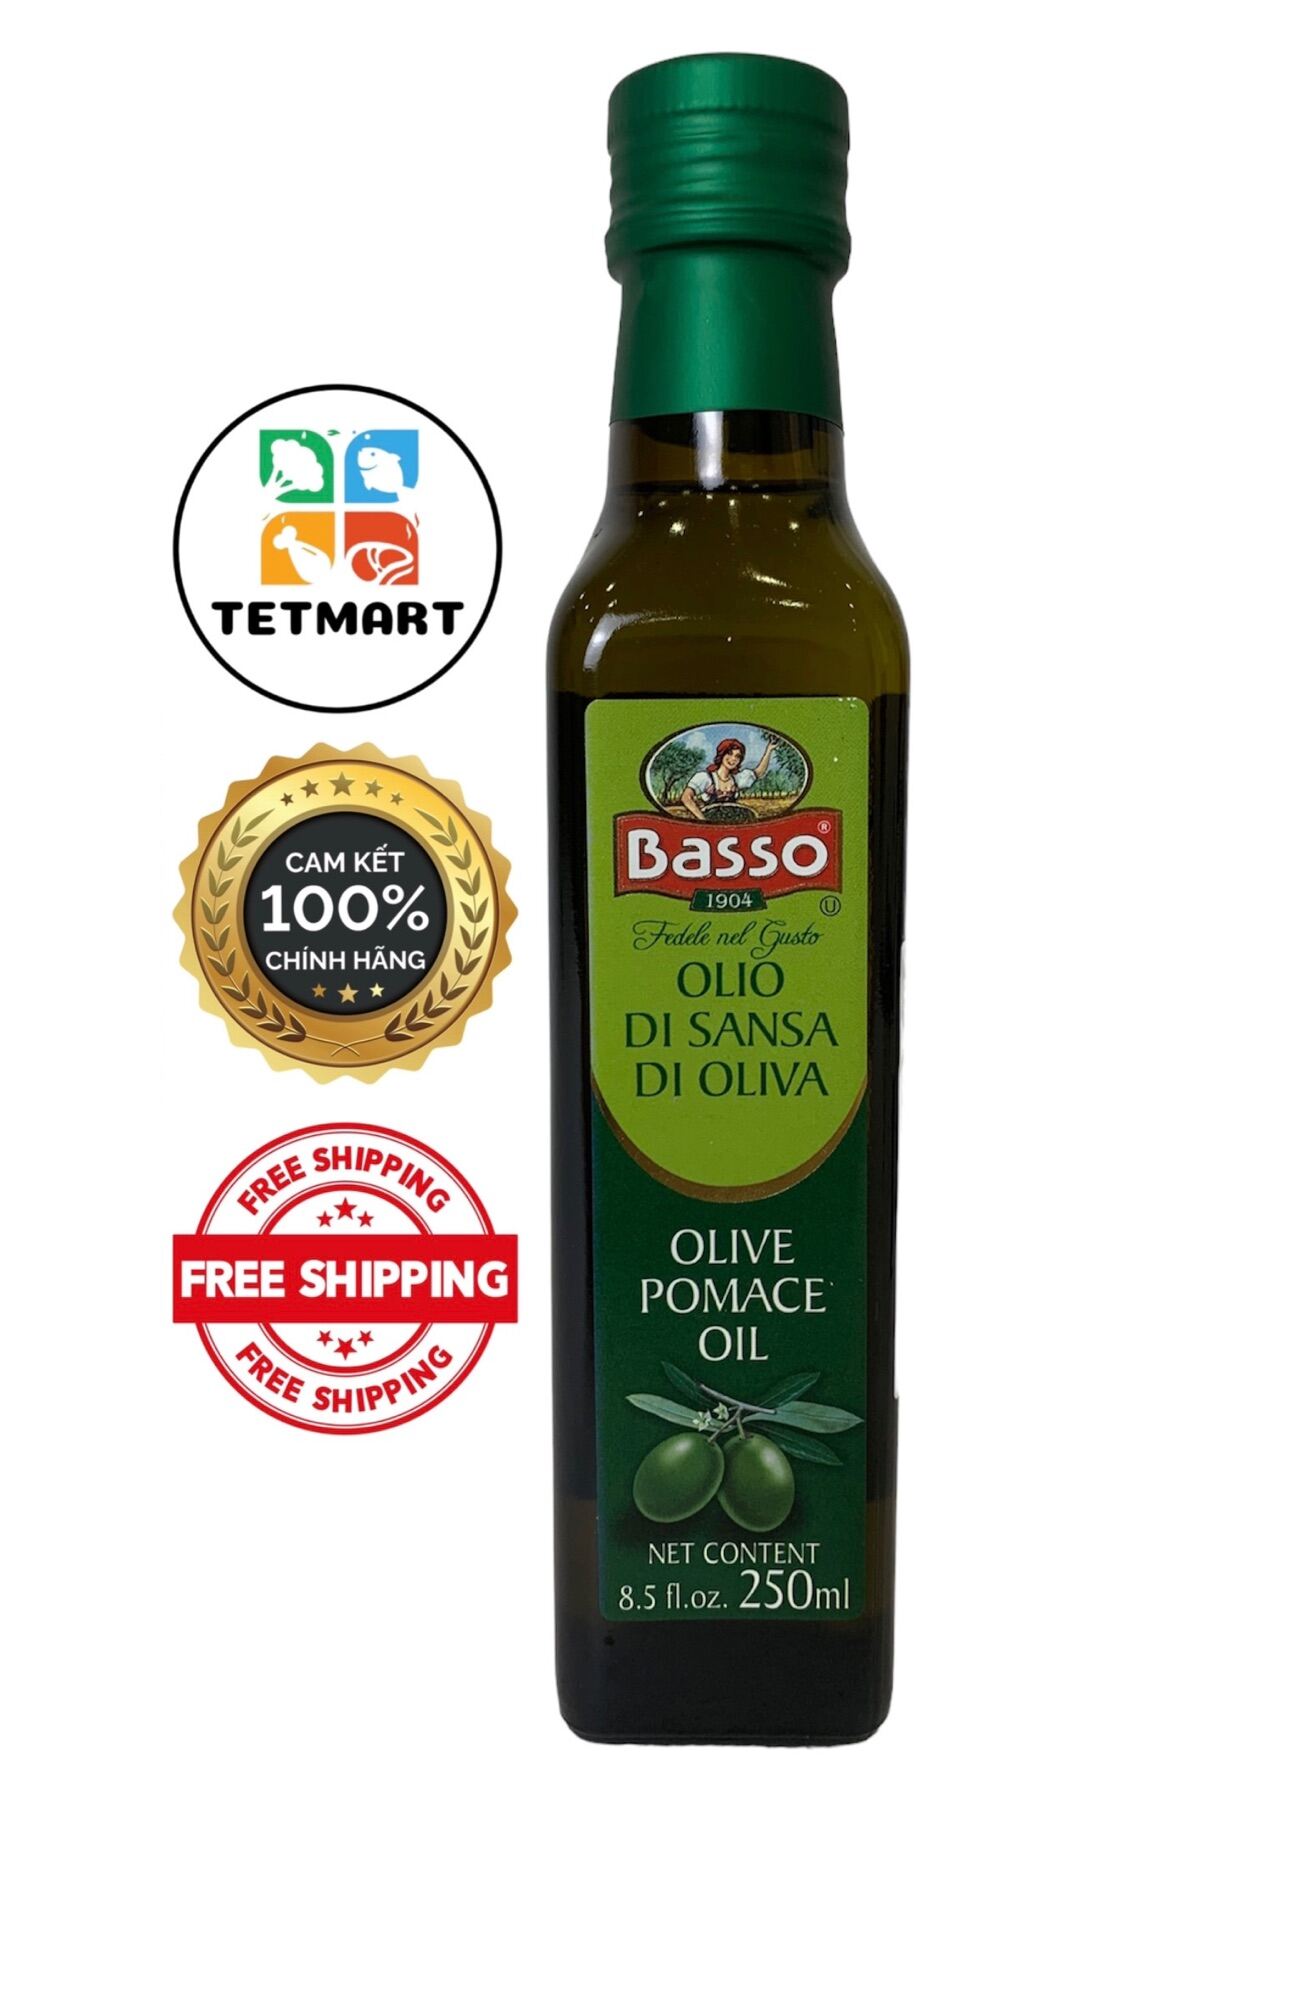 Dầu oliu ô liu pomance Basso 250ml nhập khẩu Basso Italia olive pomance